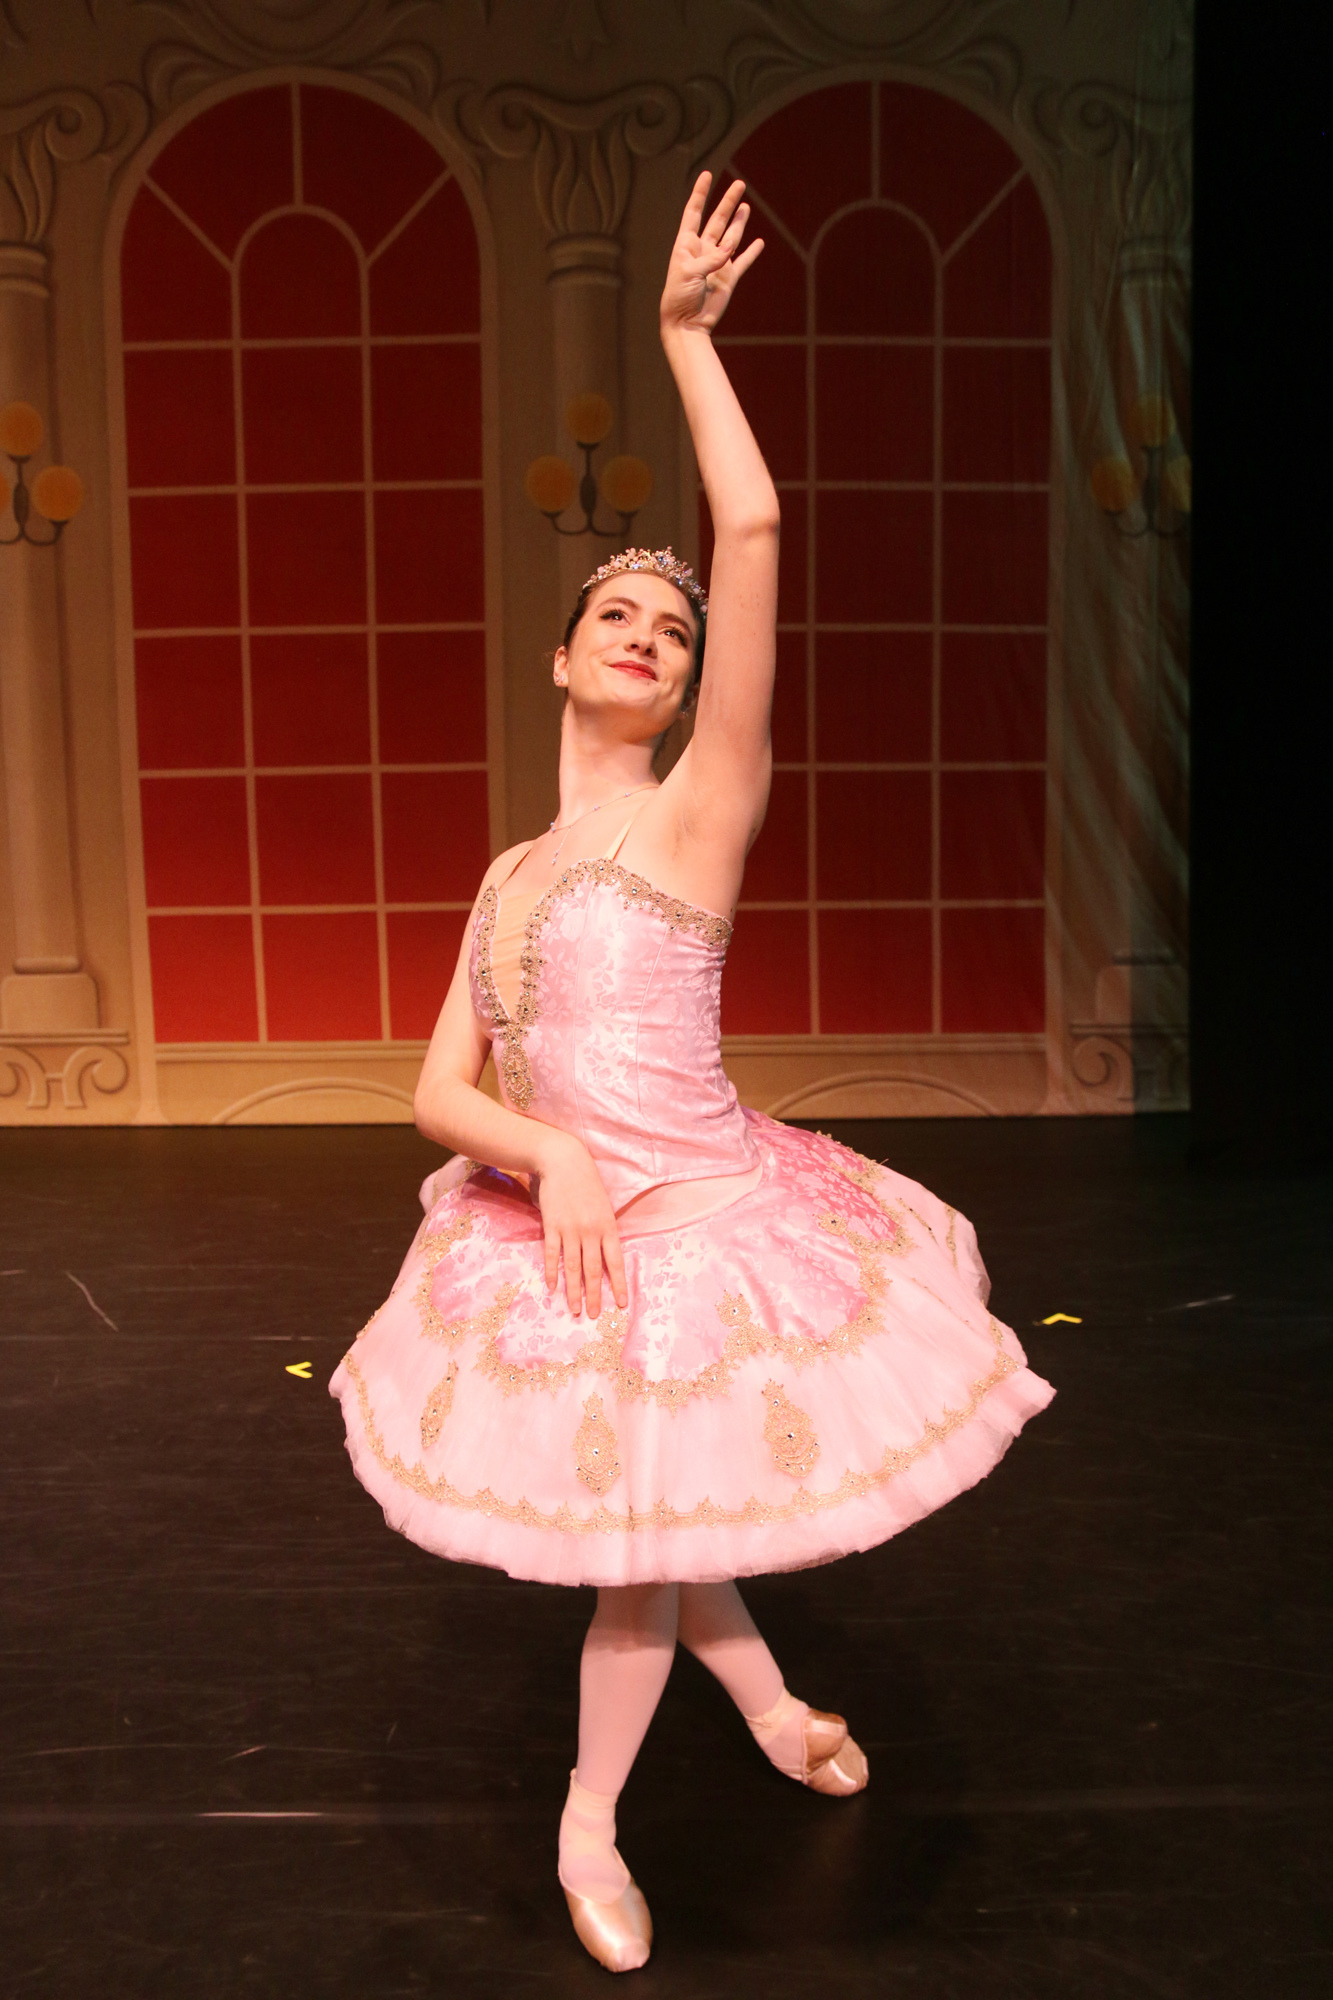 Taylor Falb has been dancing since she was 2 years old. Photo by Jarleene Almenas